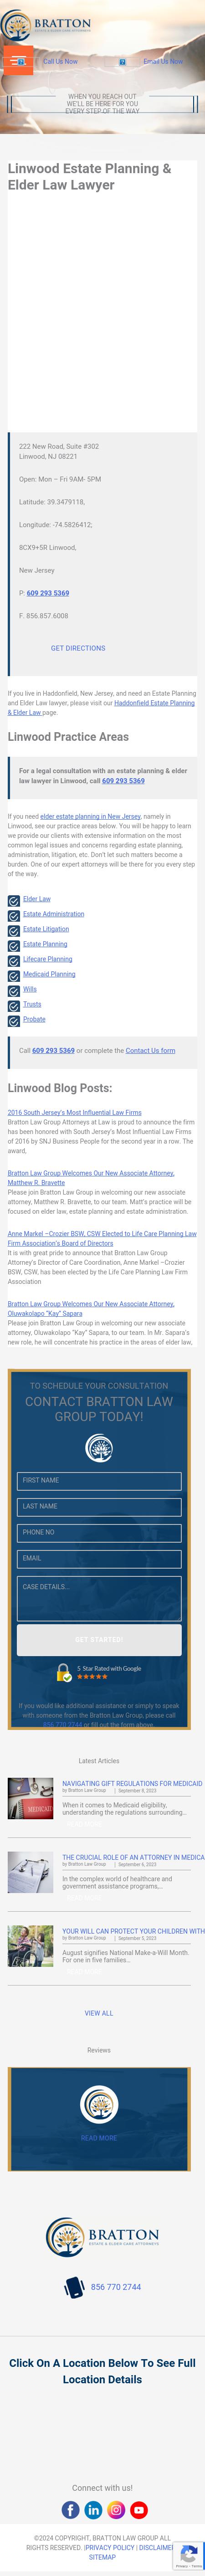 Bratton Law Group - Linwood NJ Lawyers